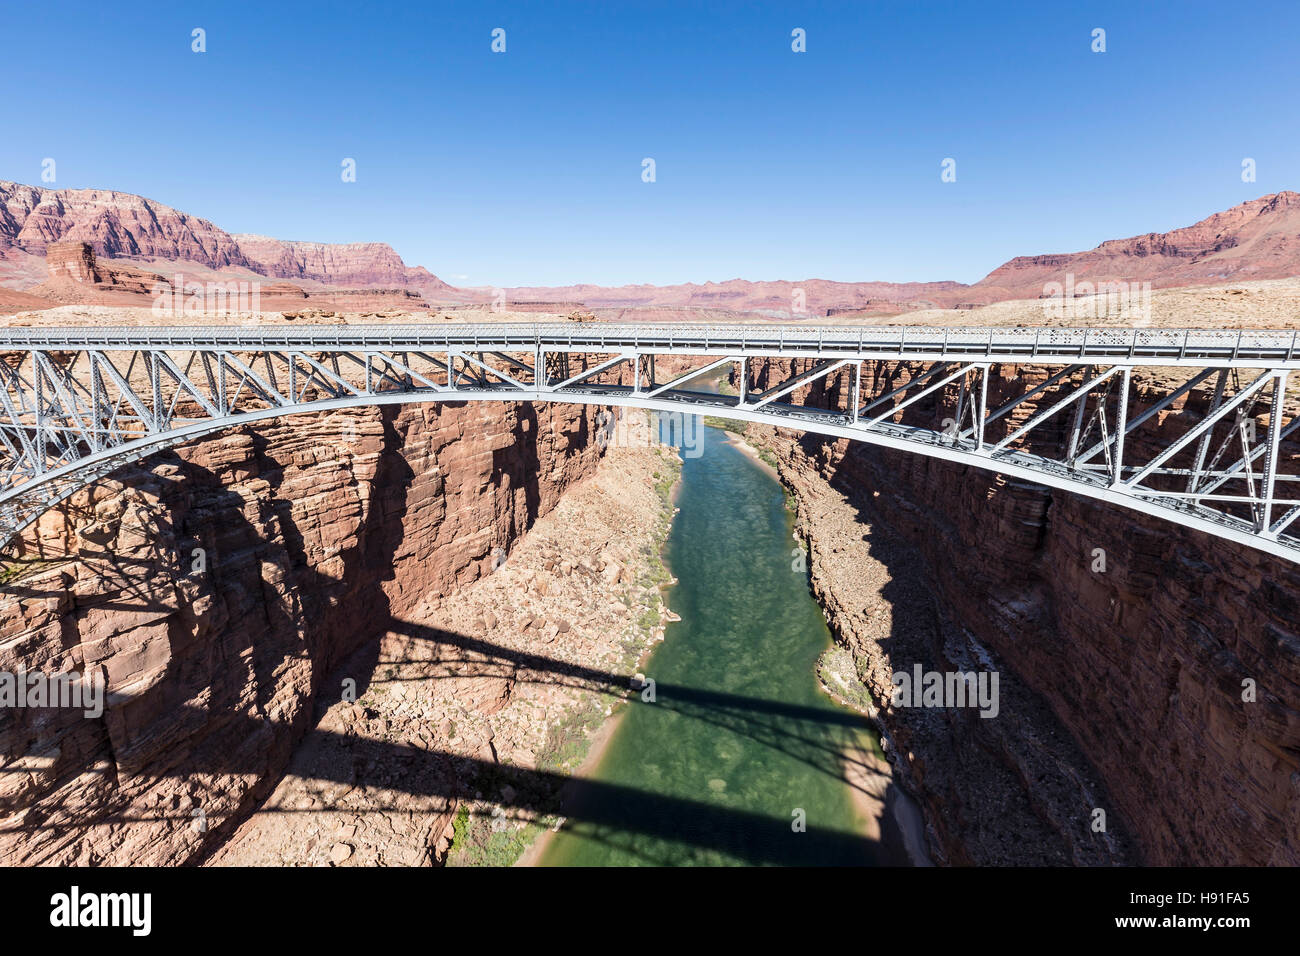 Historischen Navajo-Brücke über den Colorado River am Glen Canyon National Recreation Area im nördlichen Arizona. Stockfoto